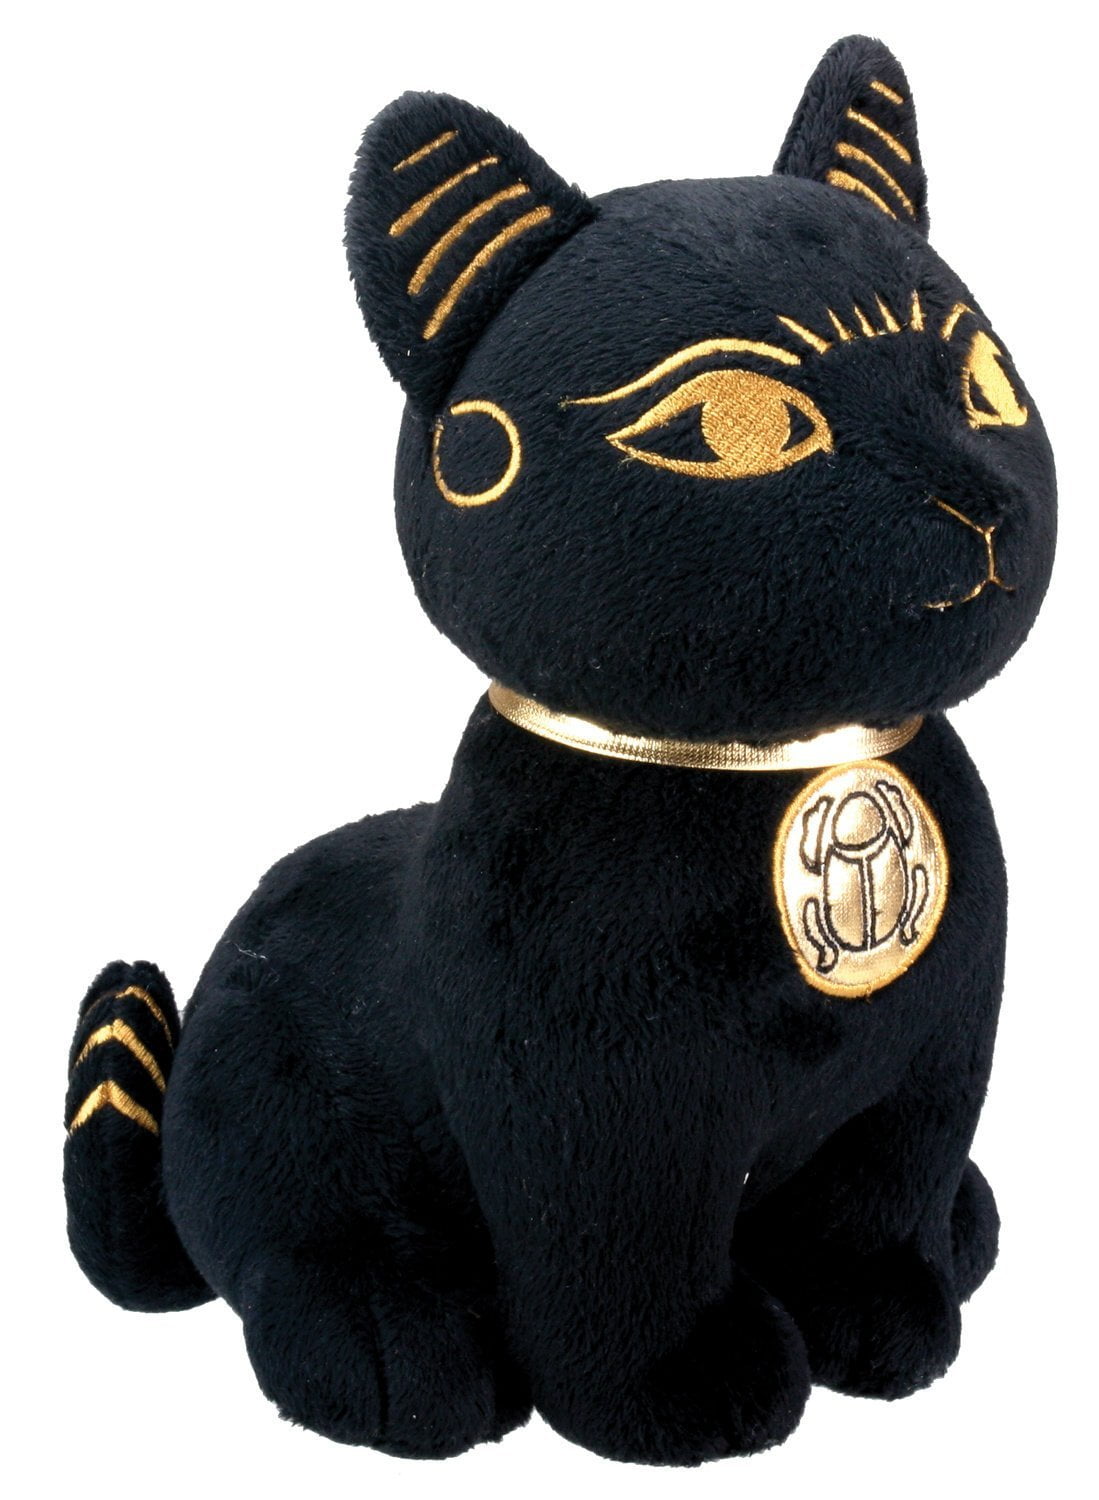 stuffed black kitten